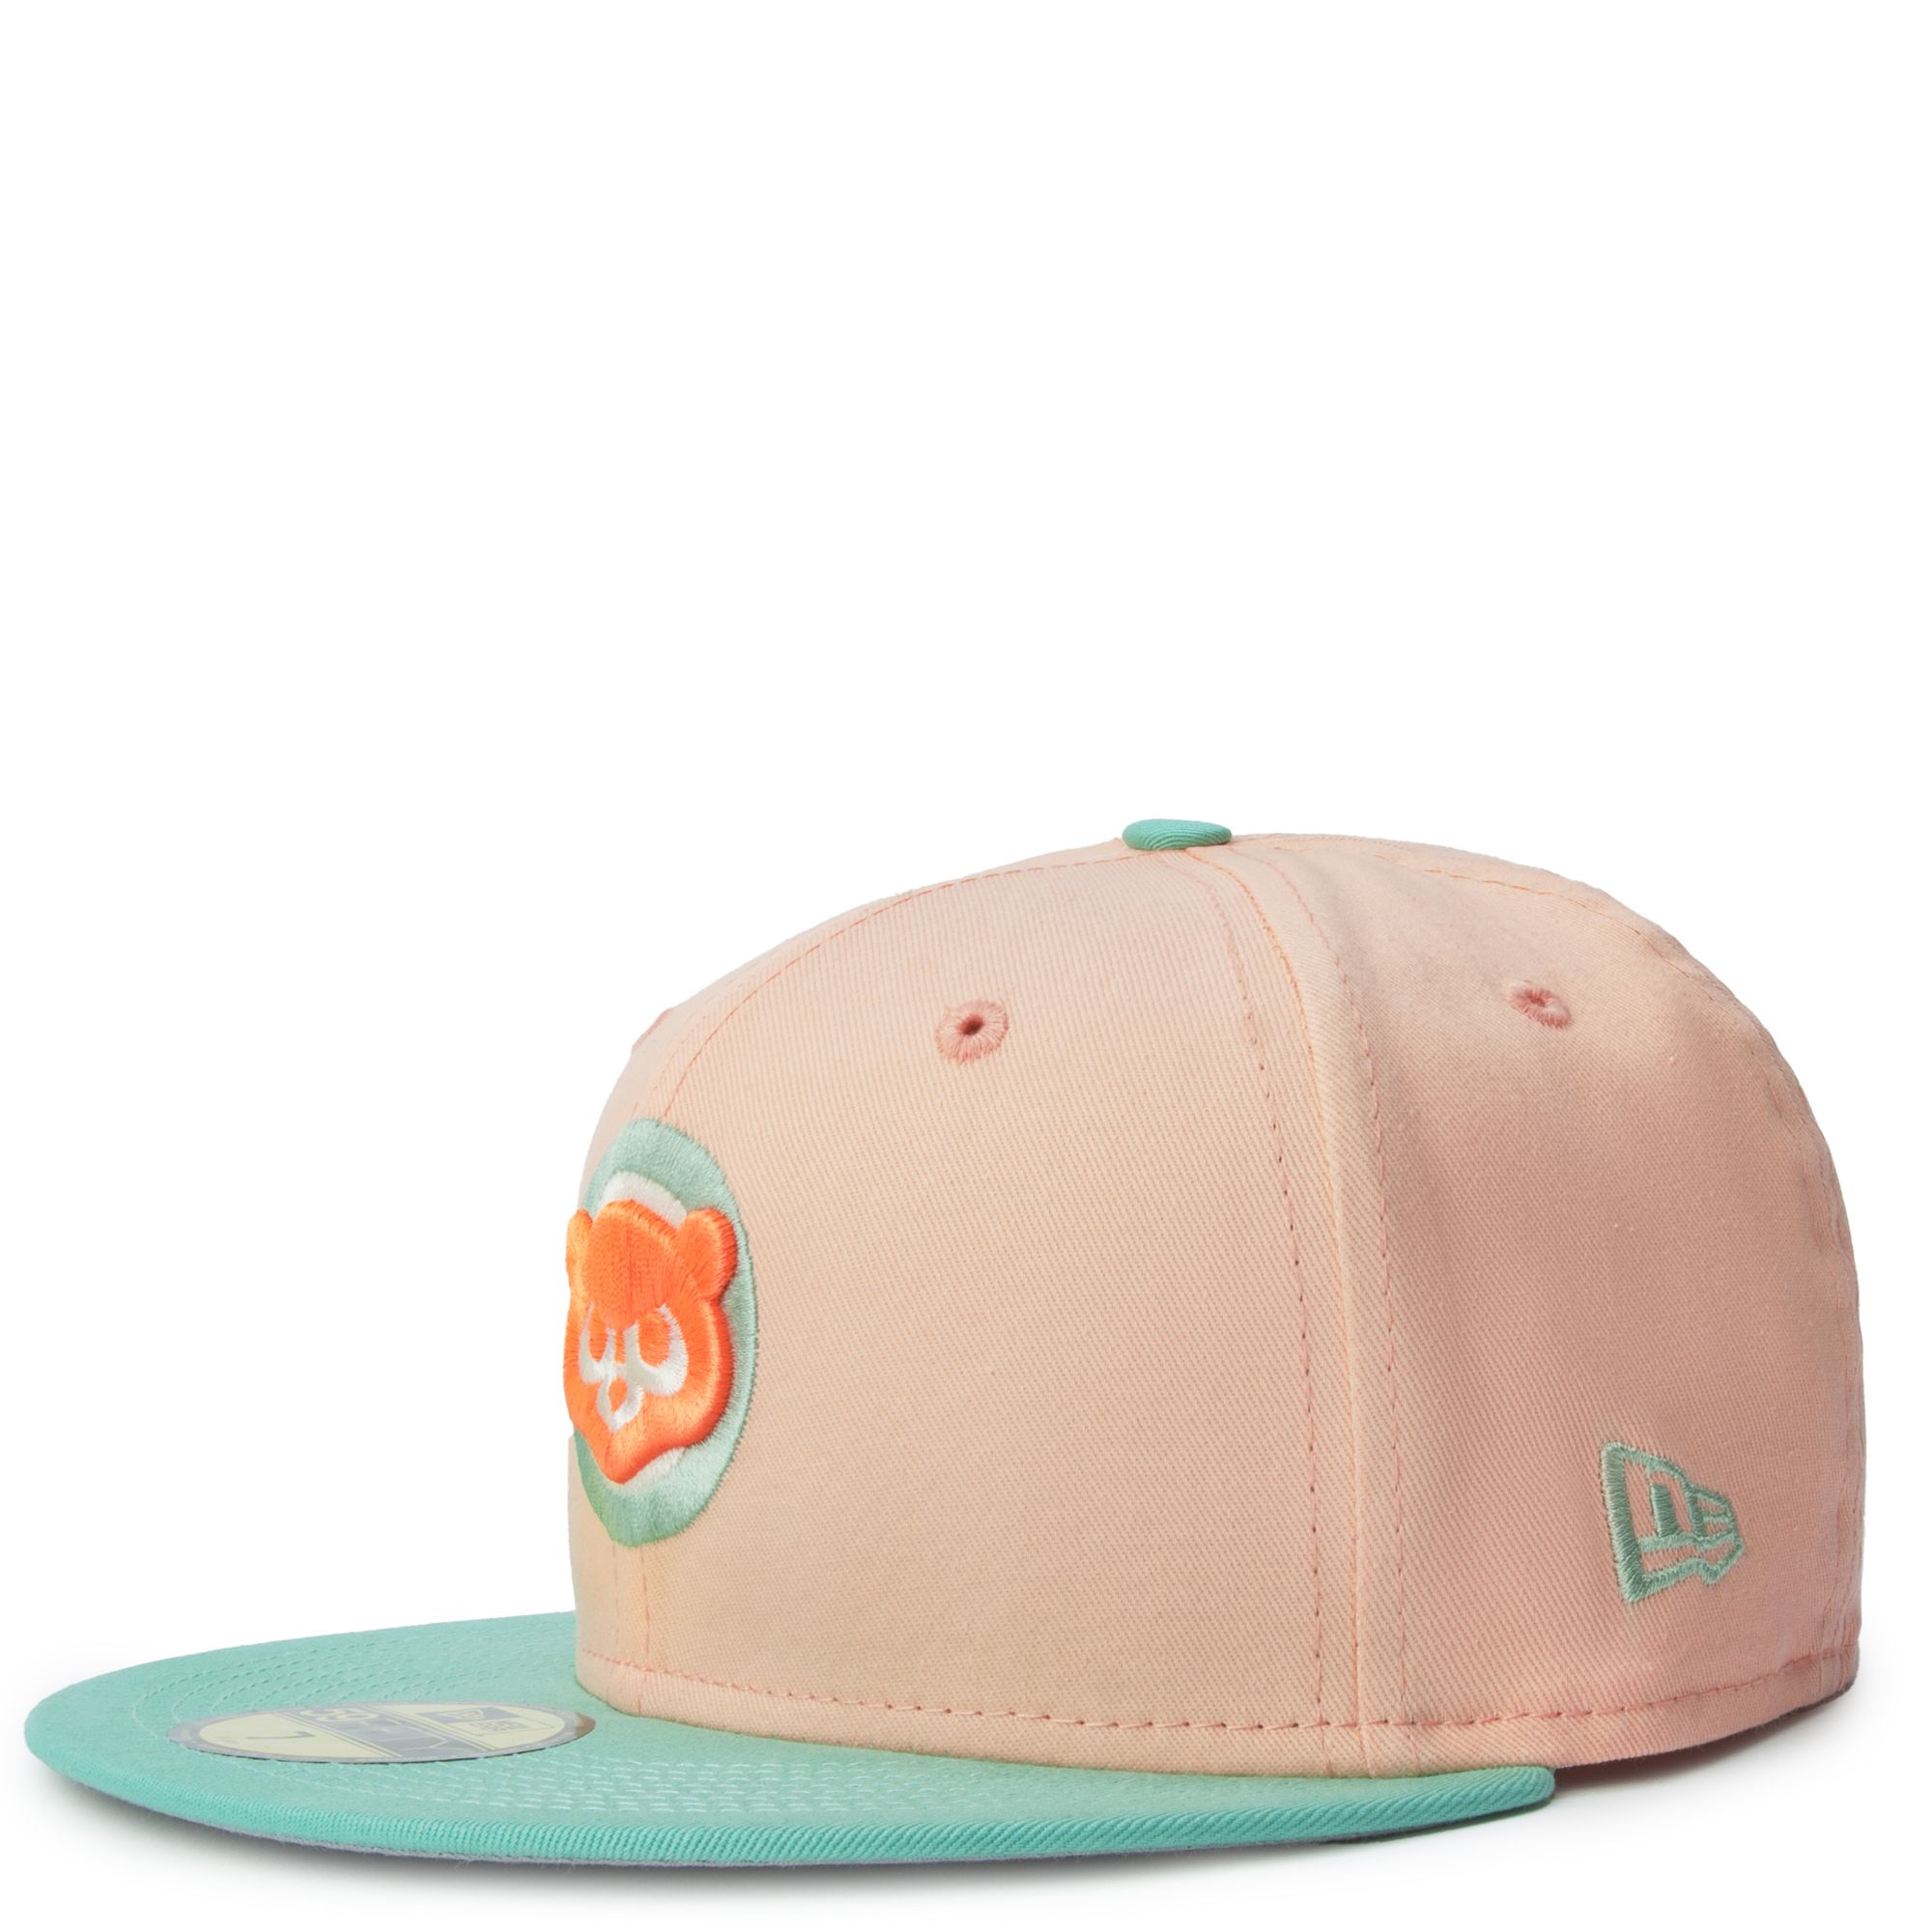 New Era Caps Toronto Blue Jays Peach Mint 59FIFTY Fitted Hat Peach/Mint